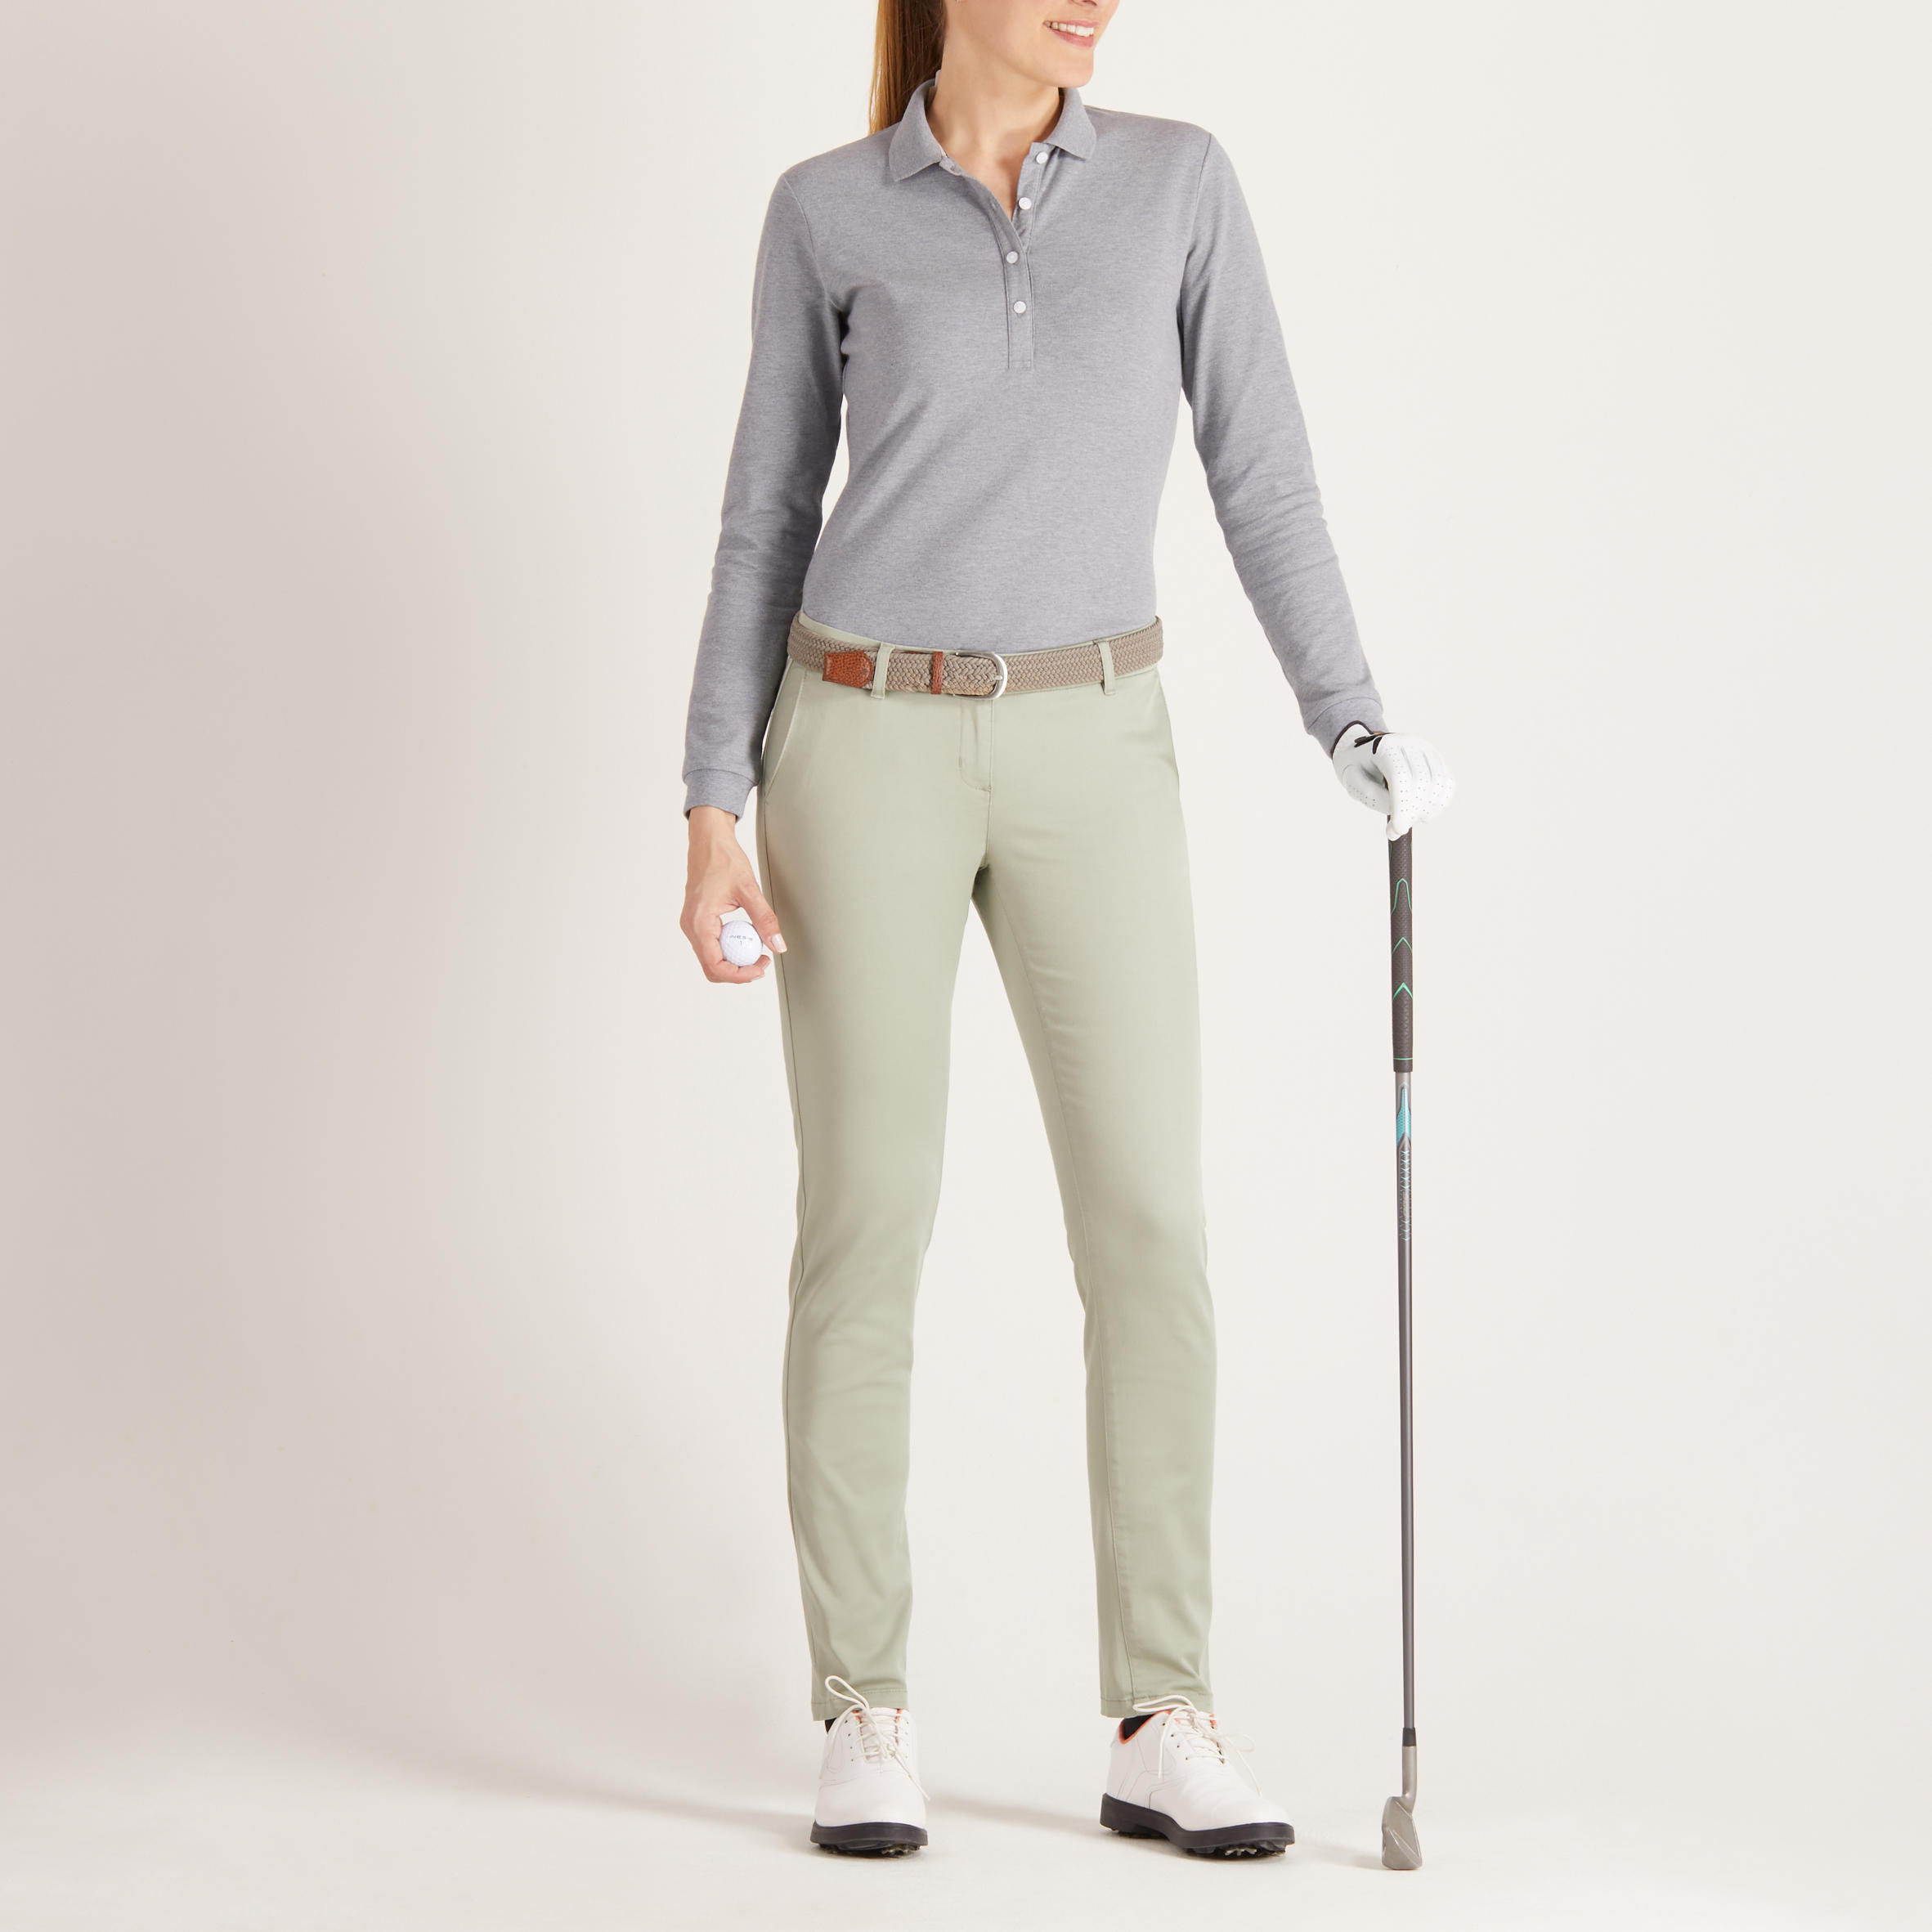 Slazenger  Golf Trousers Ladies  Navy  SportsDirectcom